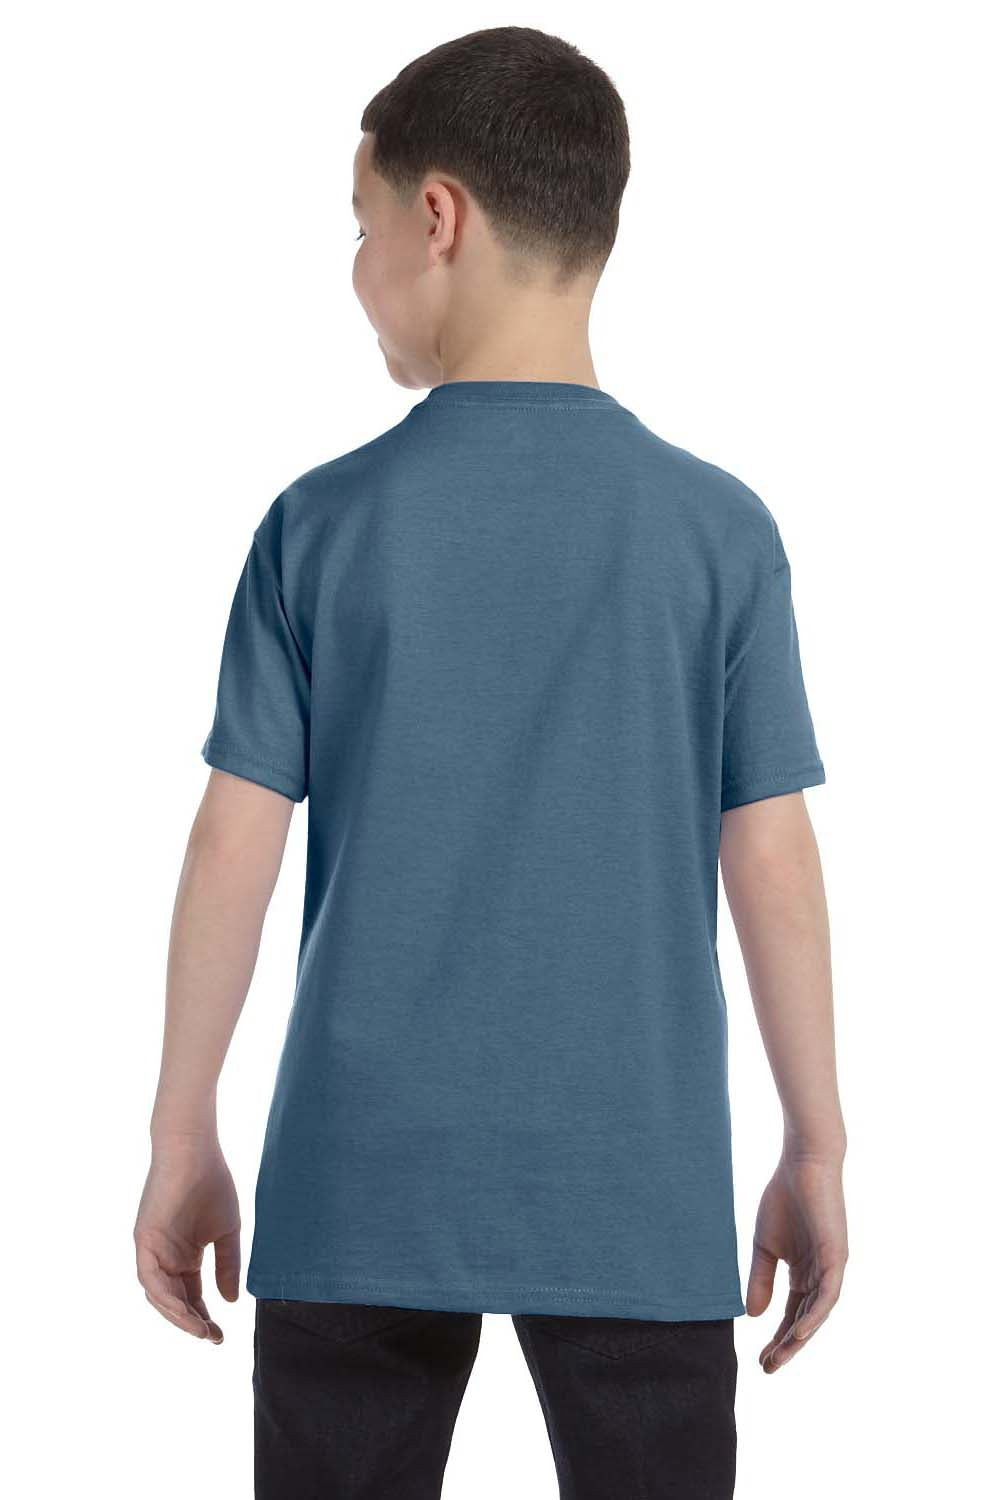 Hanes 54500 Youth ComfortSoft Short Sleeve Crewneck T-Shirt Denim Blue Back